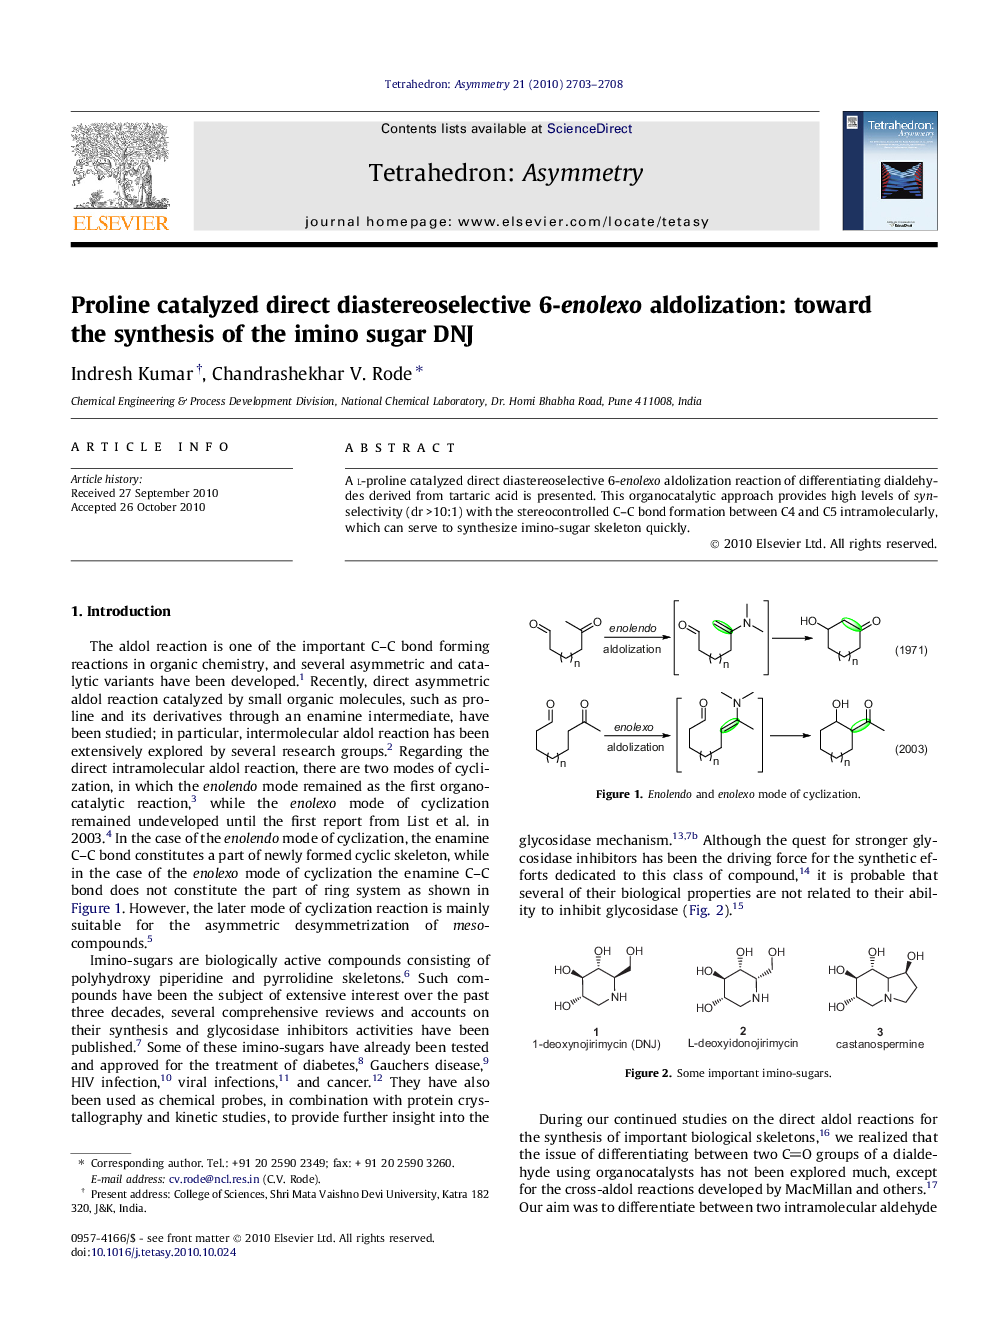 Proline catalyzed direct diastereoselective 6-enolexo aldolization: toward the synthesis of the imino sugar DNJ